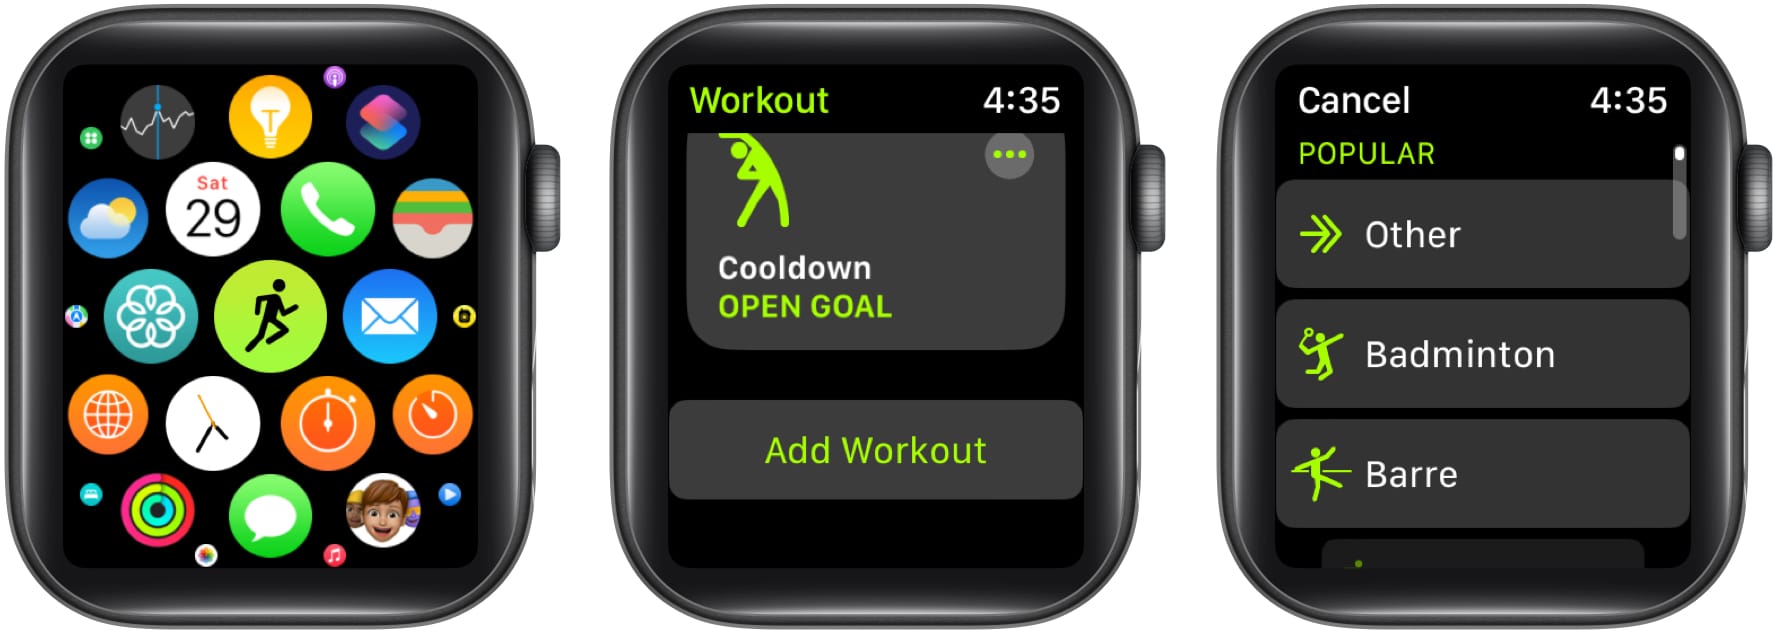 Open Workout app, select Add Workout, choose a workout